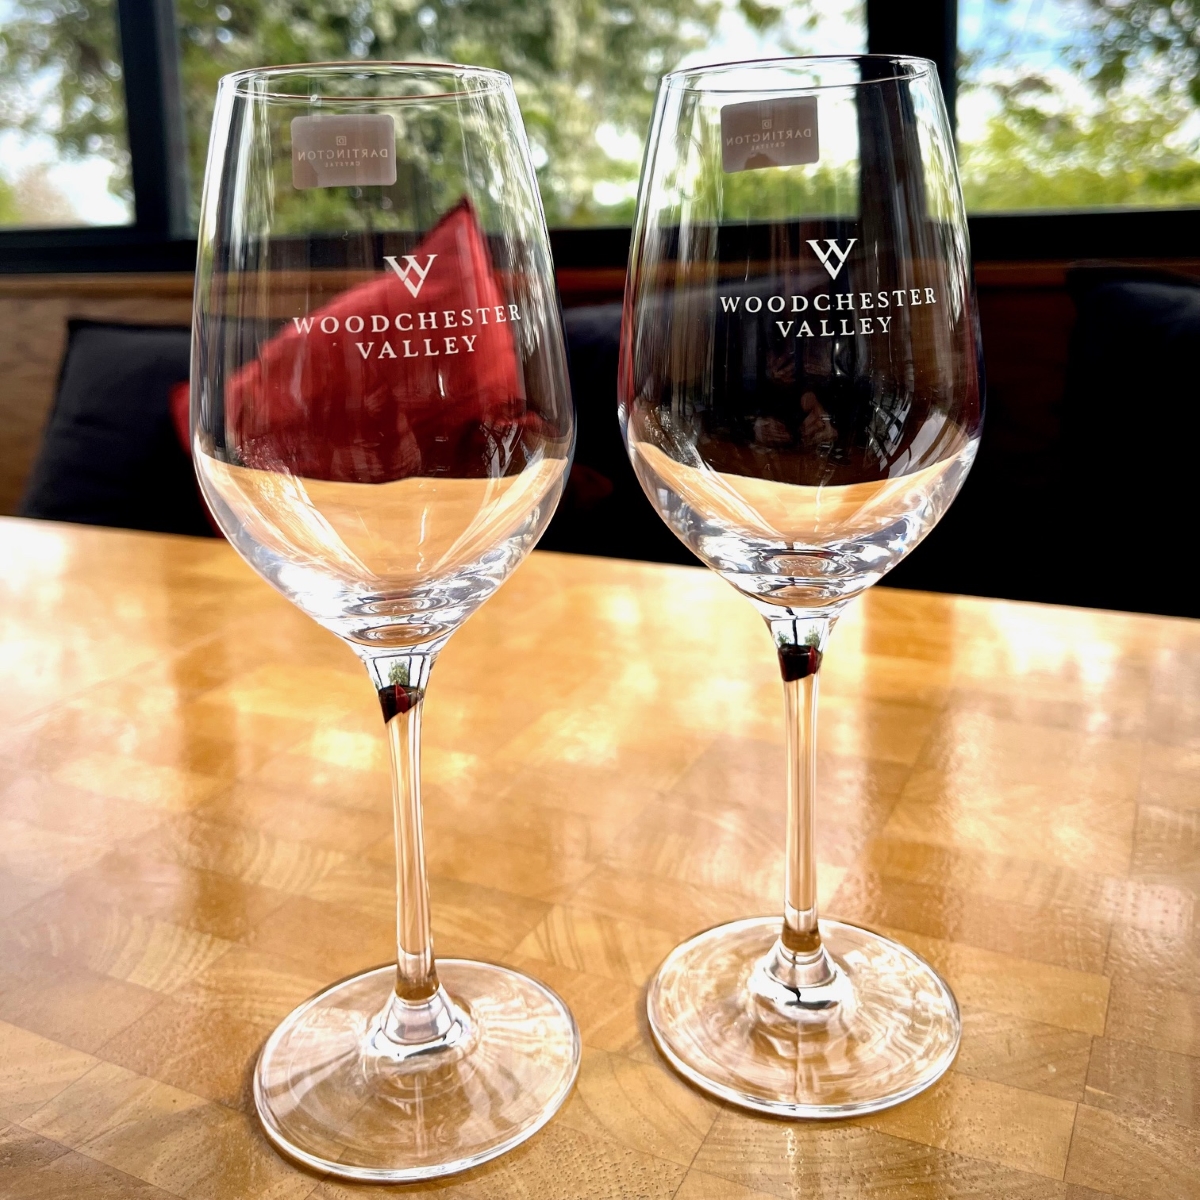 Woodchester valley vineyard branded still wine glasses by Dartington (Pair)